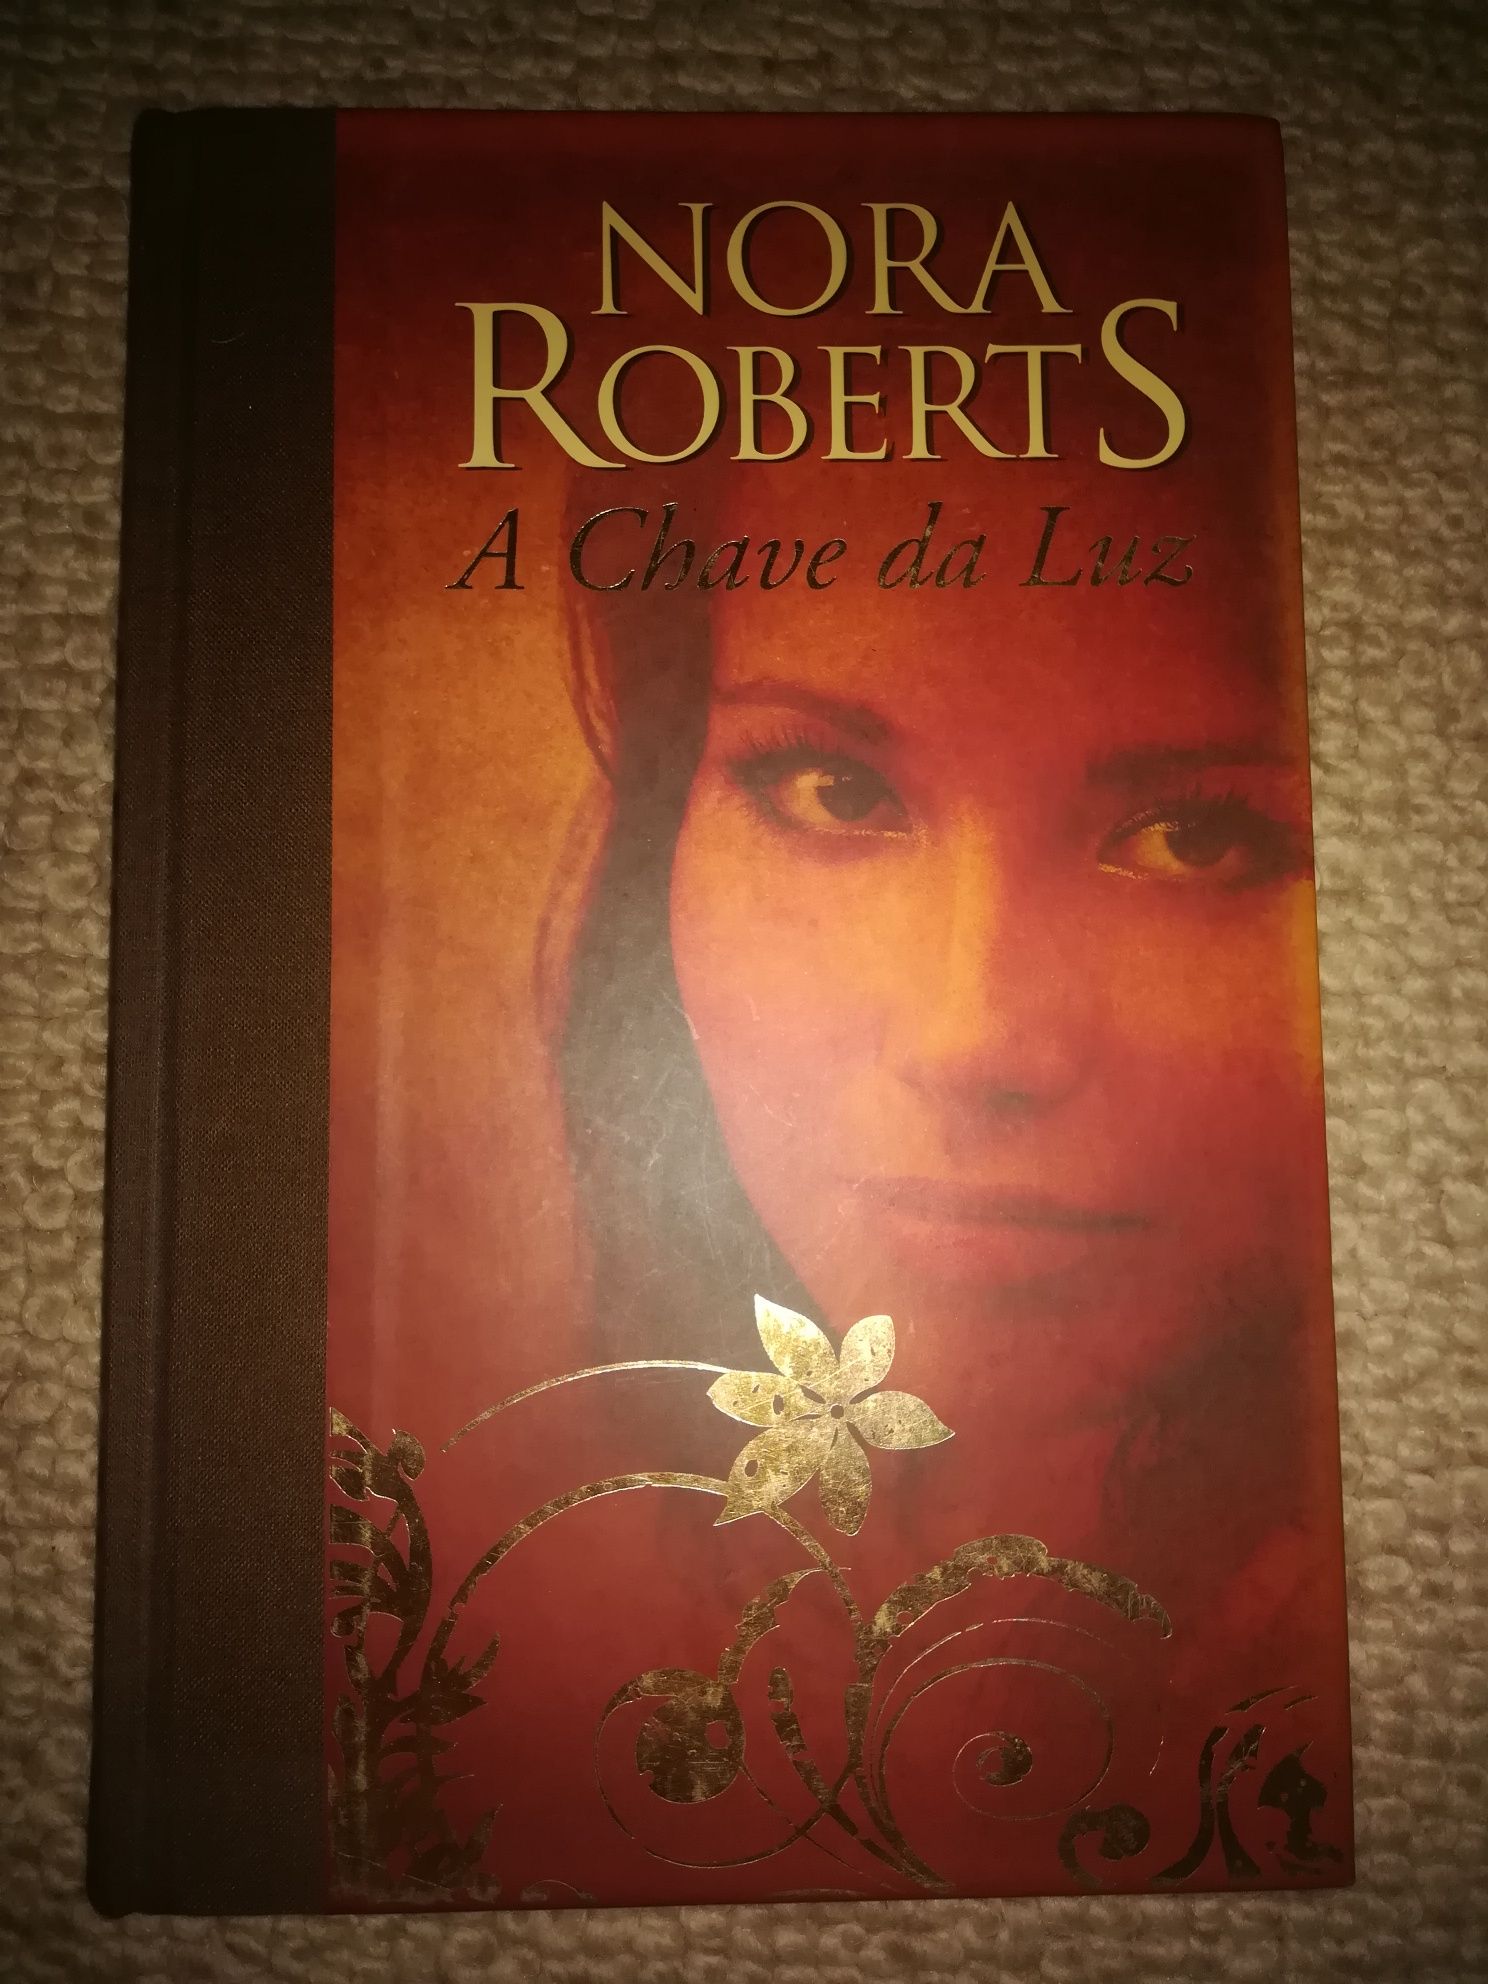 Nora Roberts - 8 livros